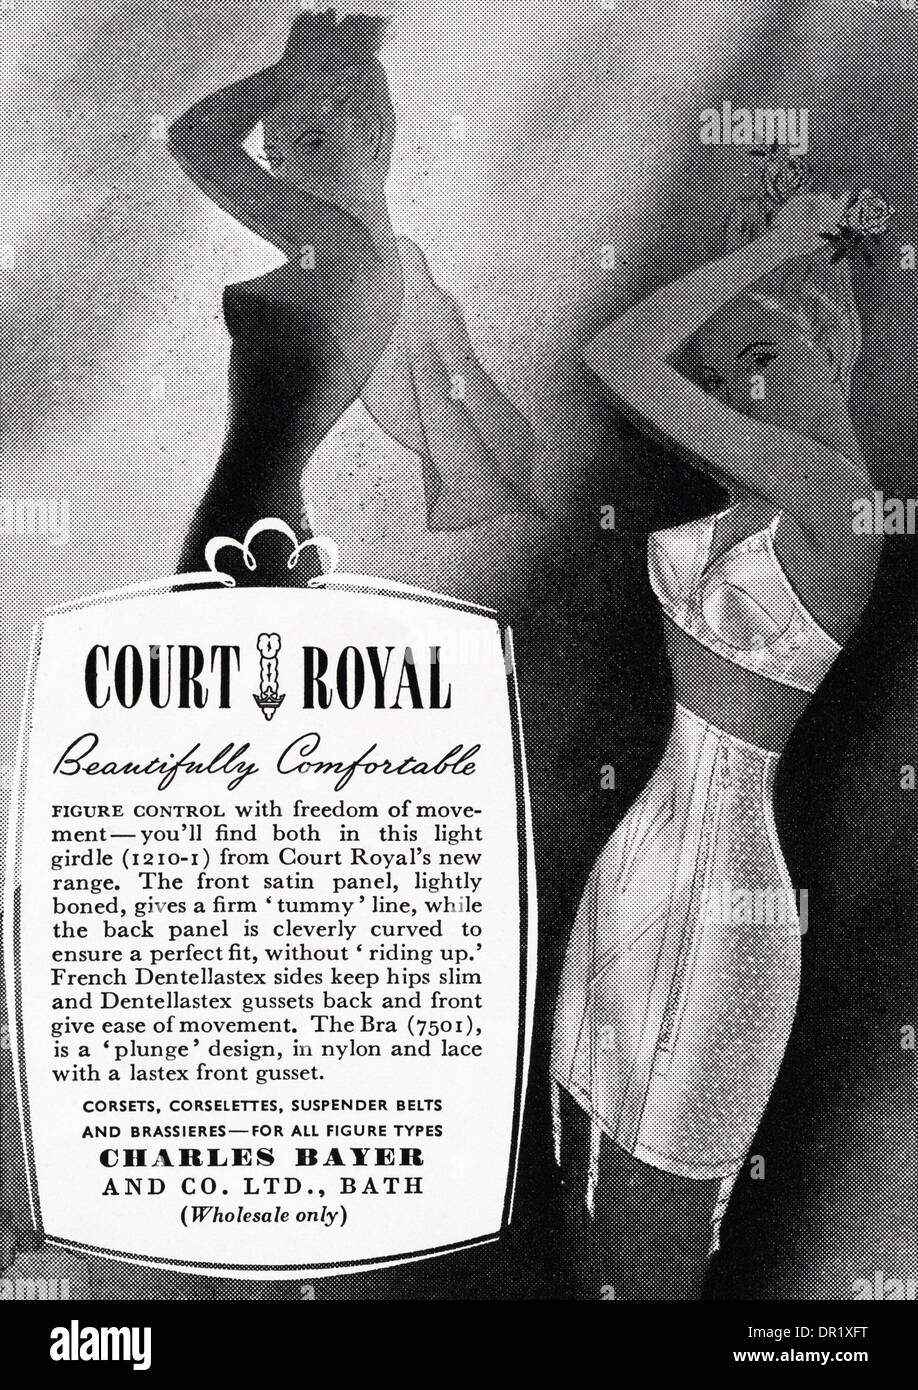 https://c8.alamy.com/comp/DR1XFT/1950s-advertisement-advertising-court-royal-ladys-lingerie-figure-DR1XFT.jpg